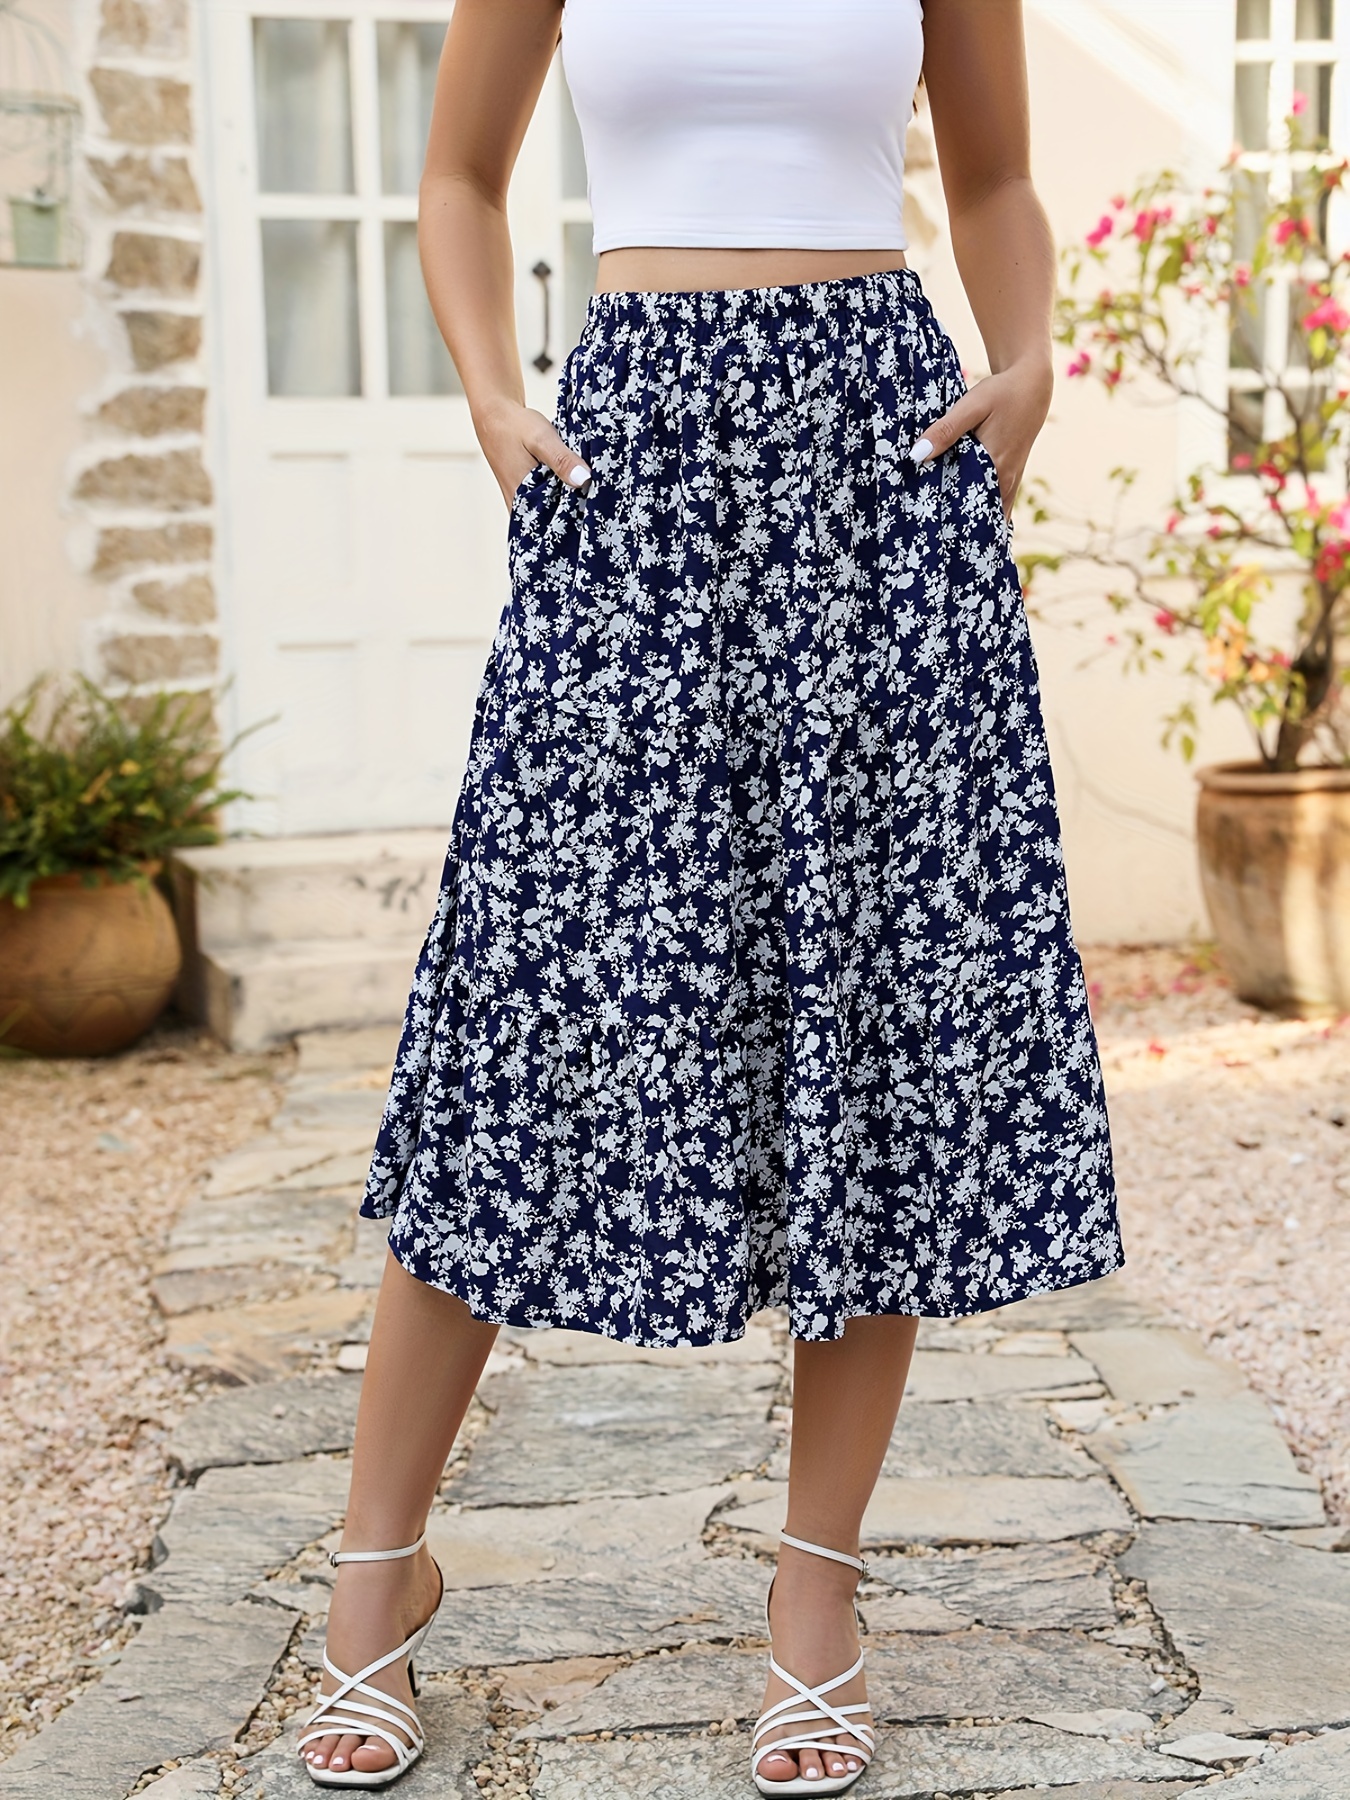 Floral cotton midi skirt